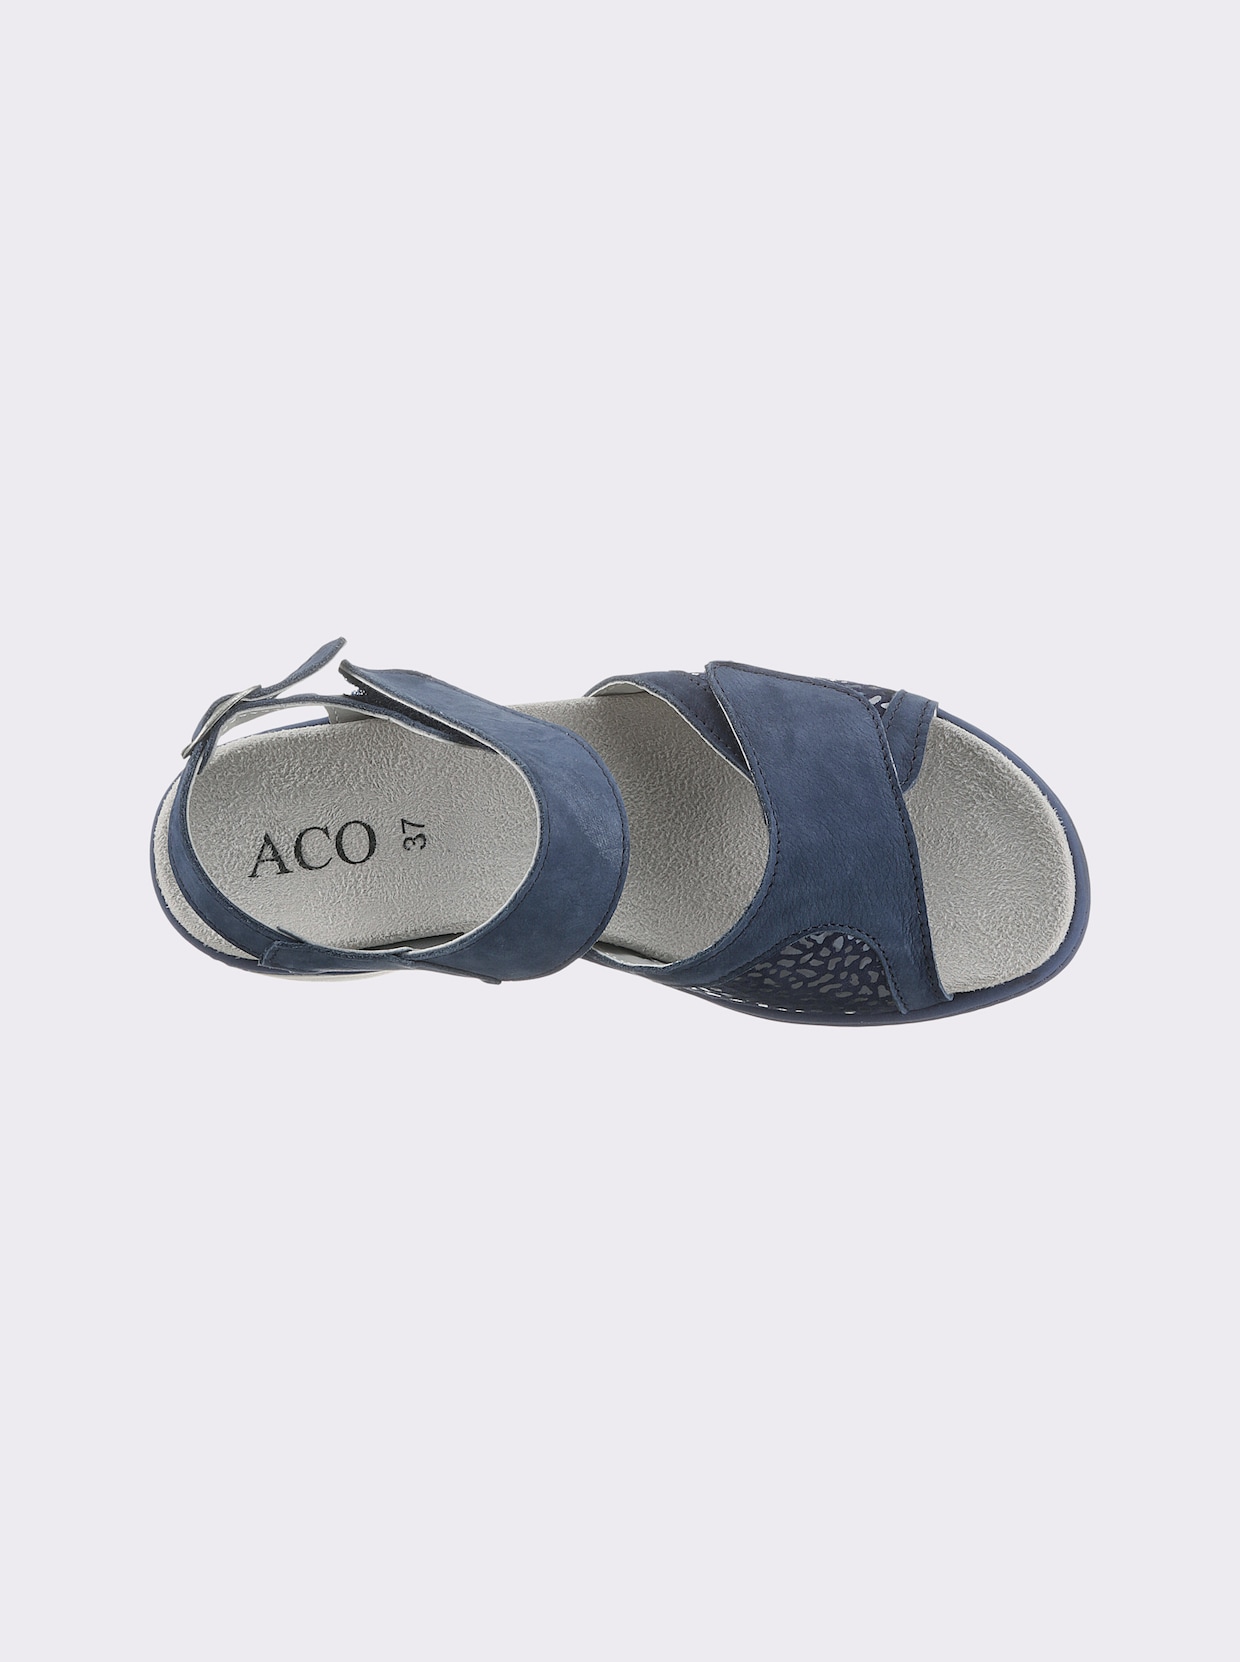 airsoft comfort+ Sandalette - jeansblau